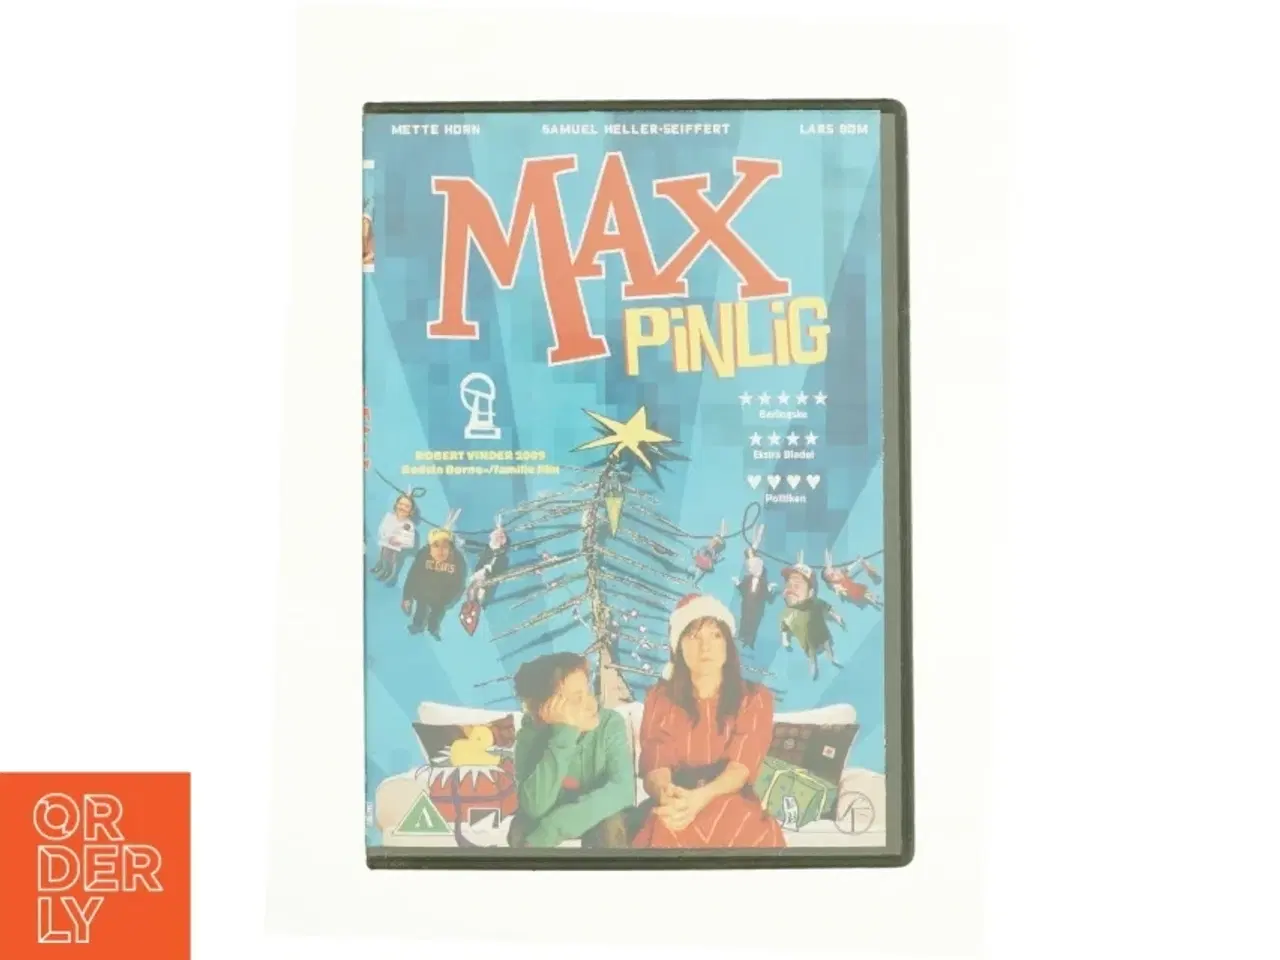 Billede 1 - Max Pinlig fra DVD